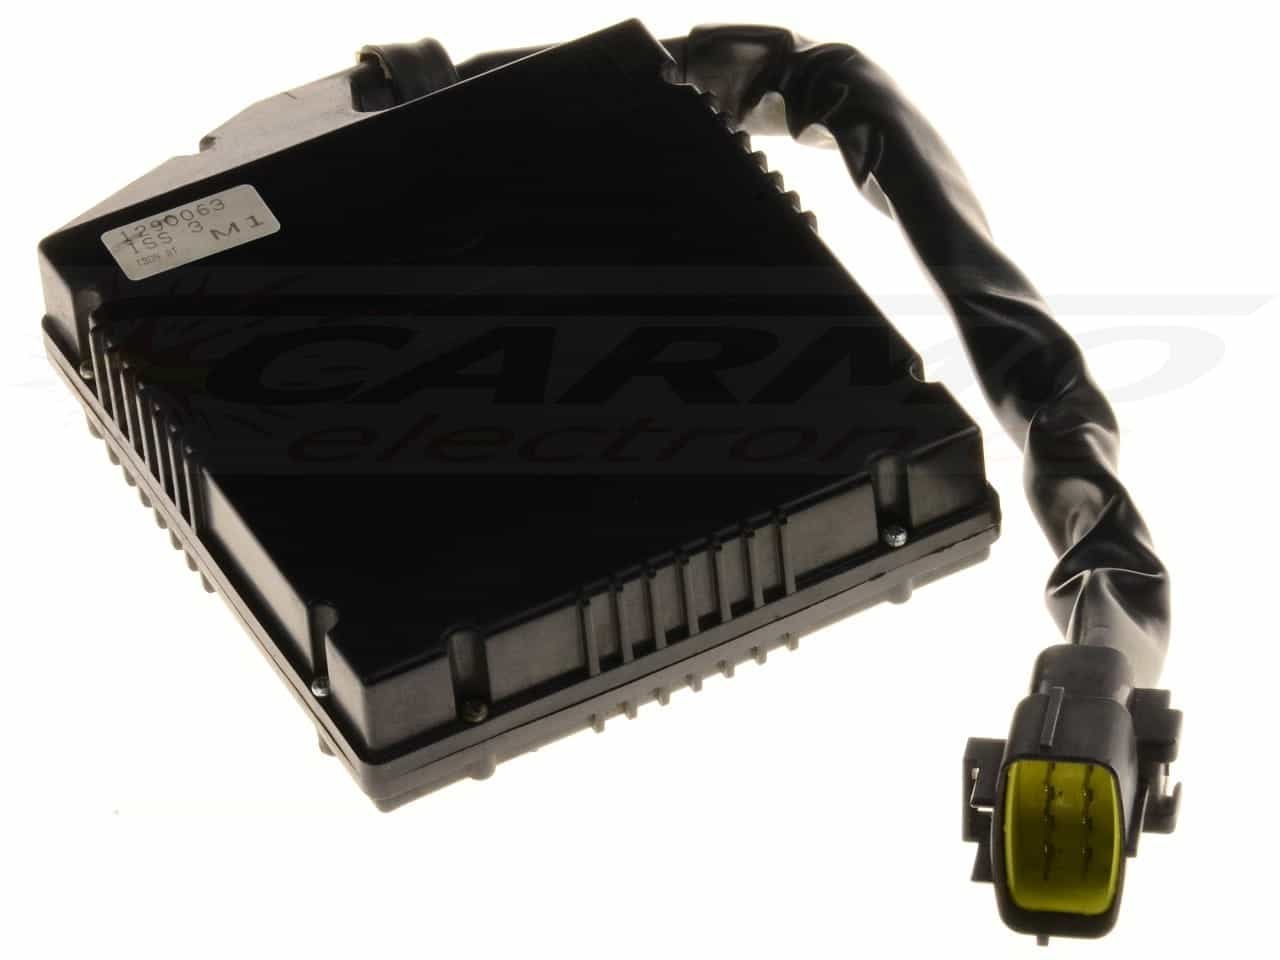 Sprint 900 PVL TCI CDI dispositif de commande boîte noire (GILL, 1290060, 1290063, 1290066)